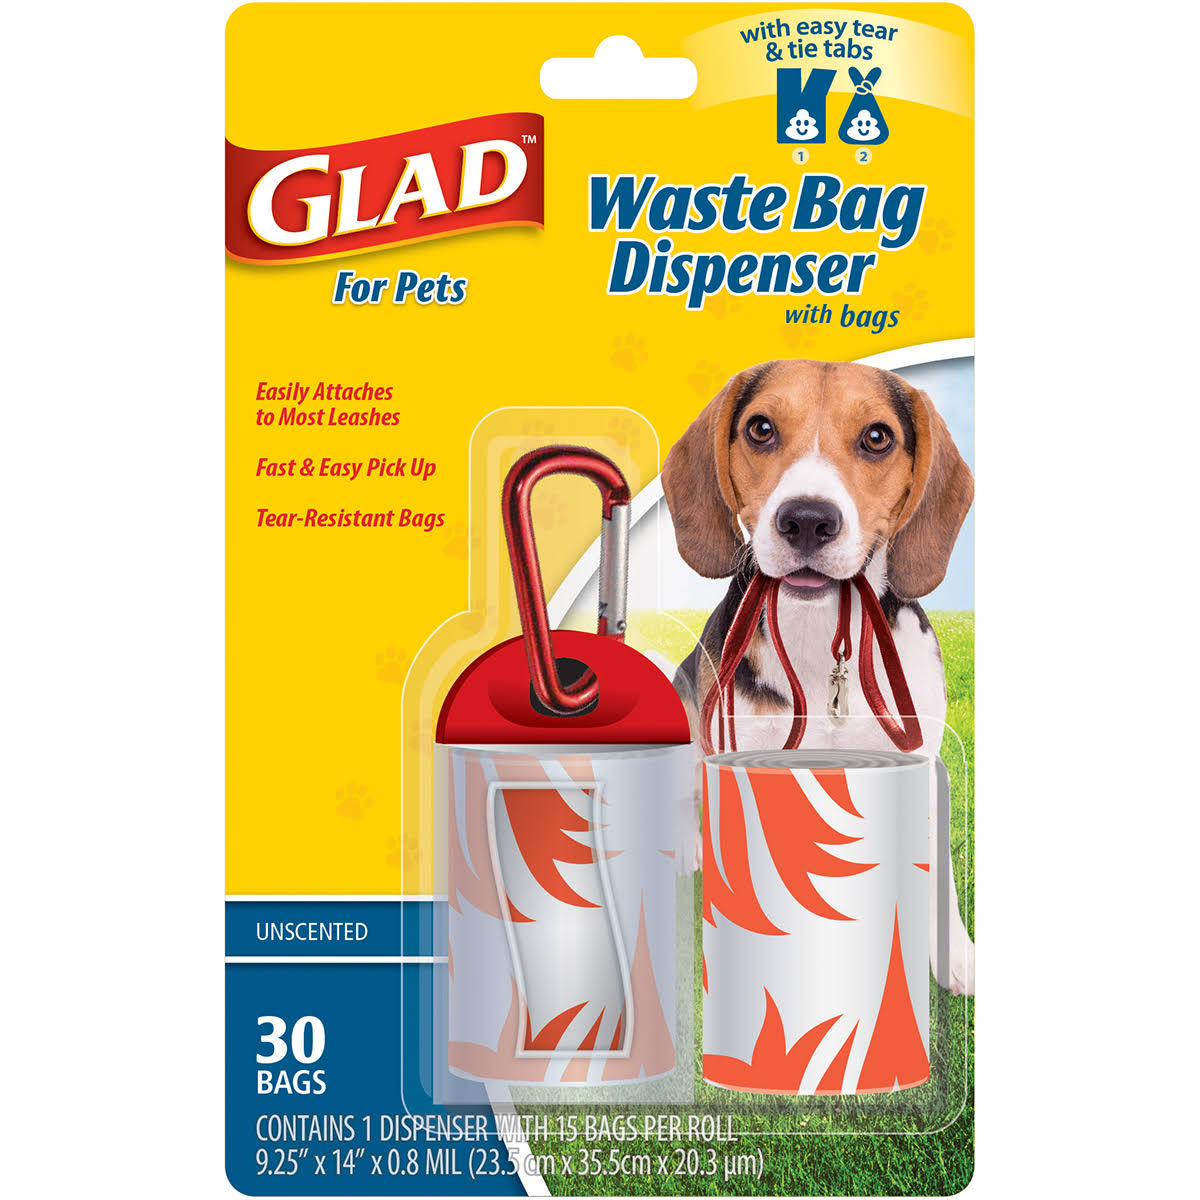 Glad Waste Bag Dispenser with Unscented Bags